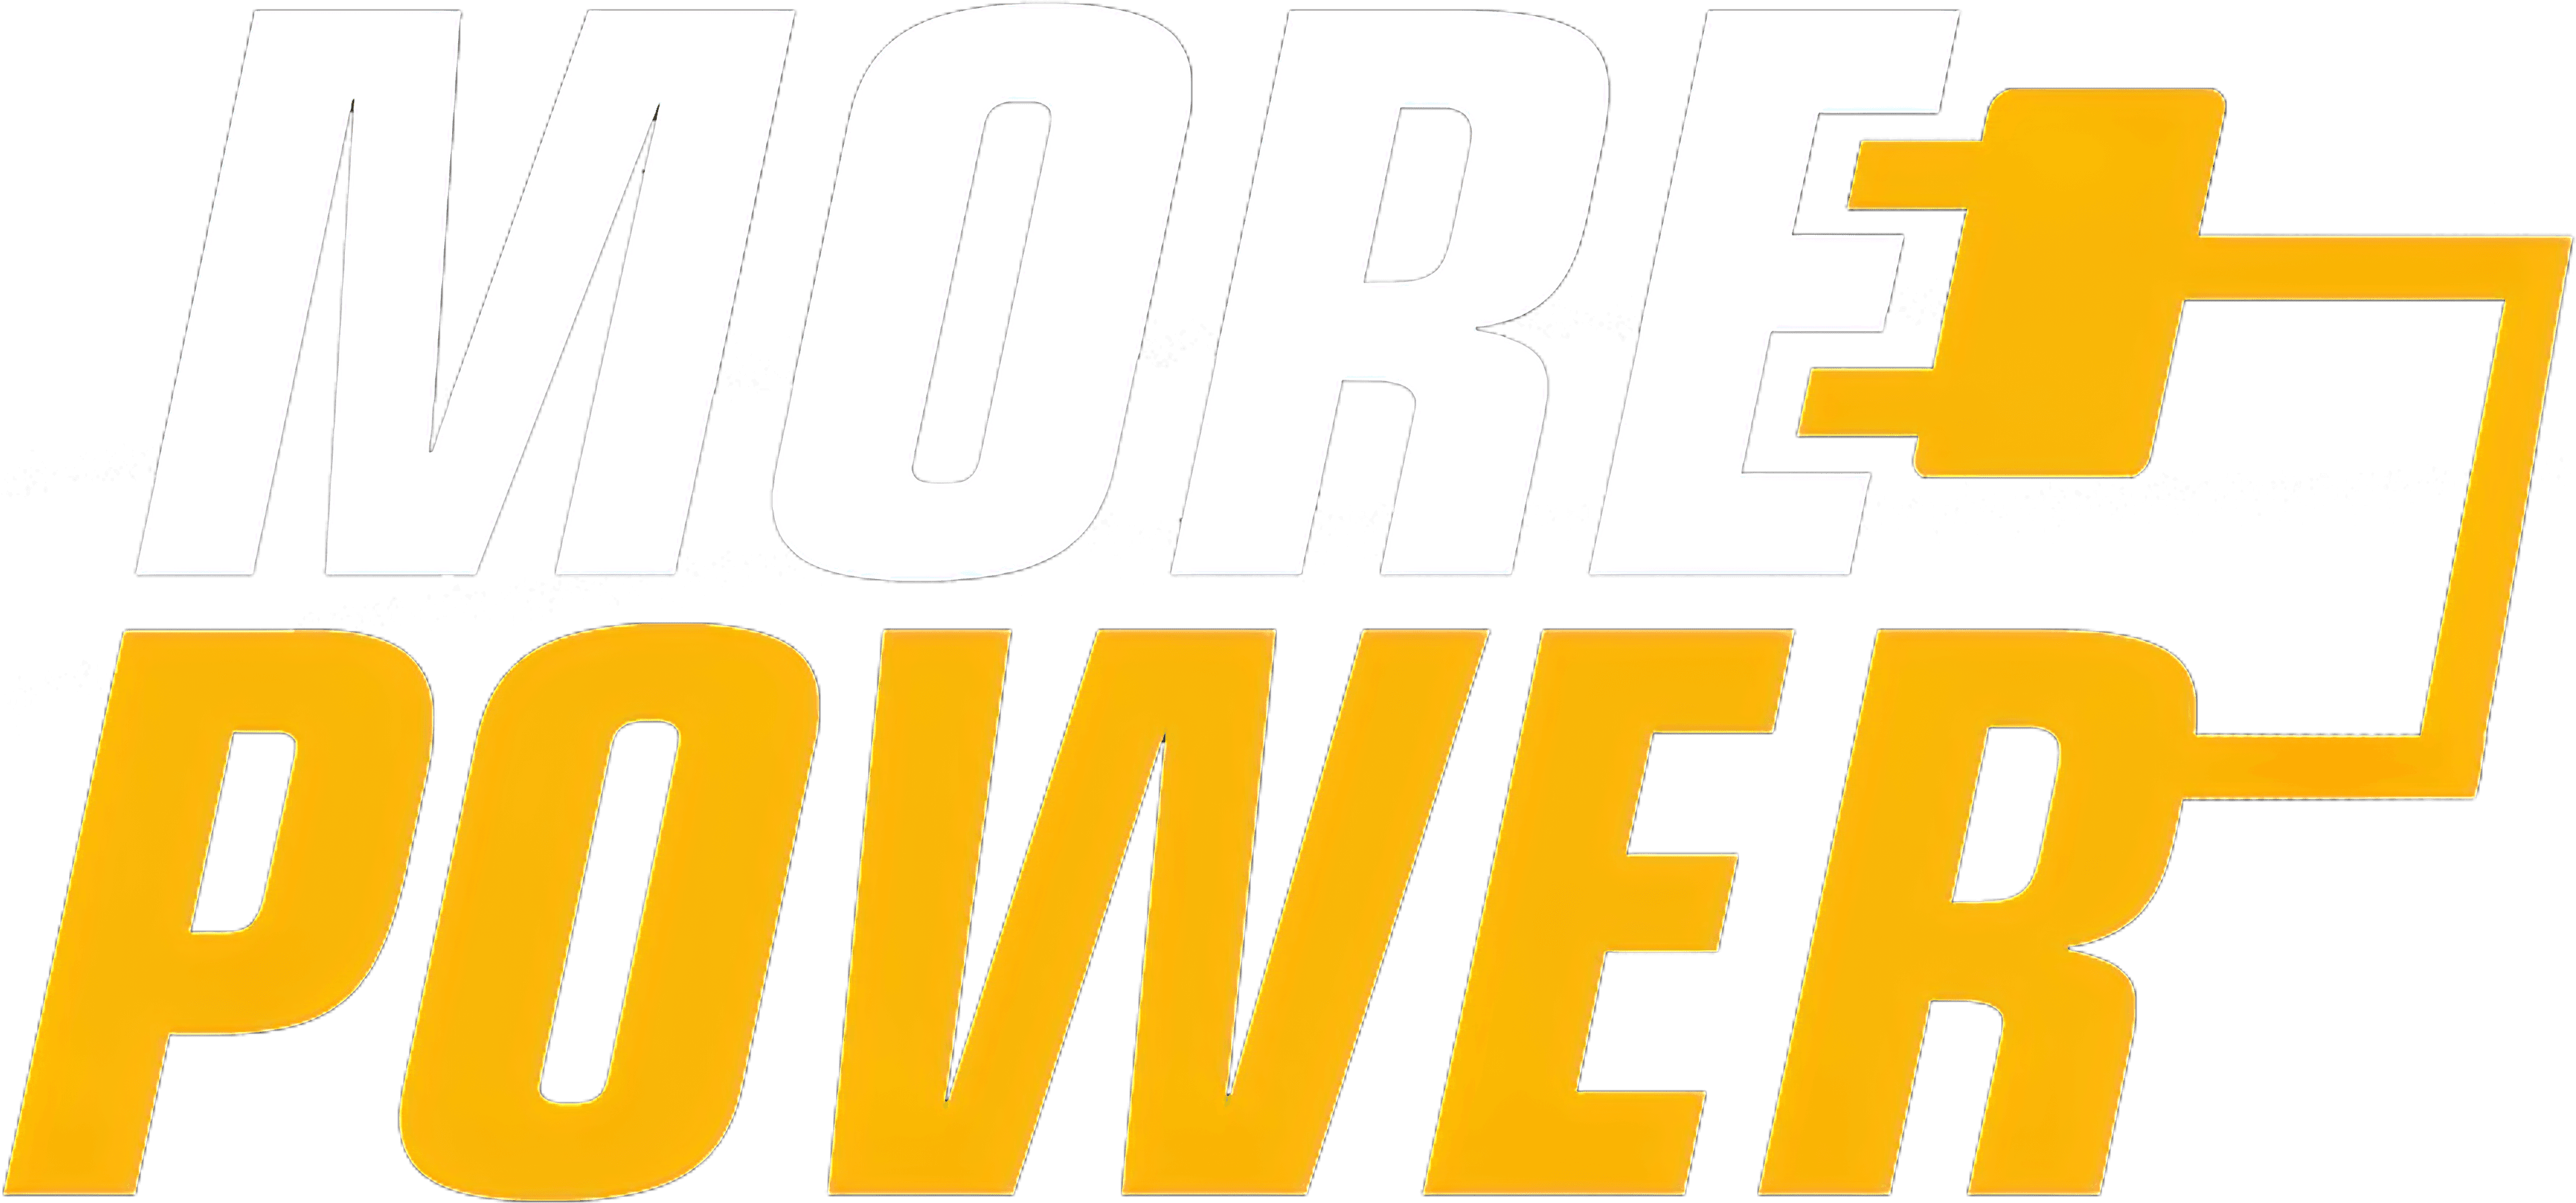 More Power logo